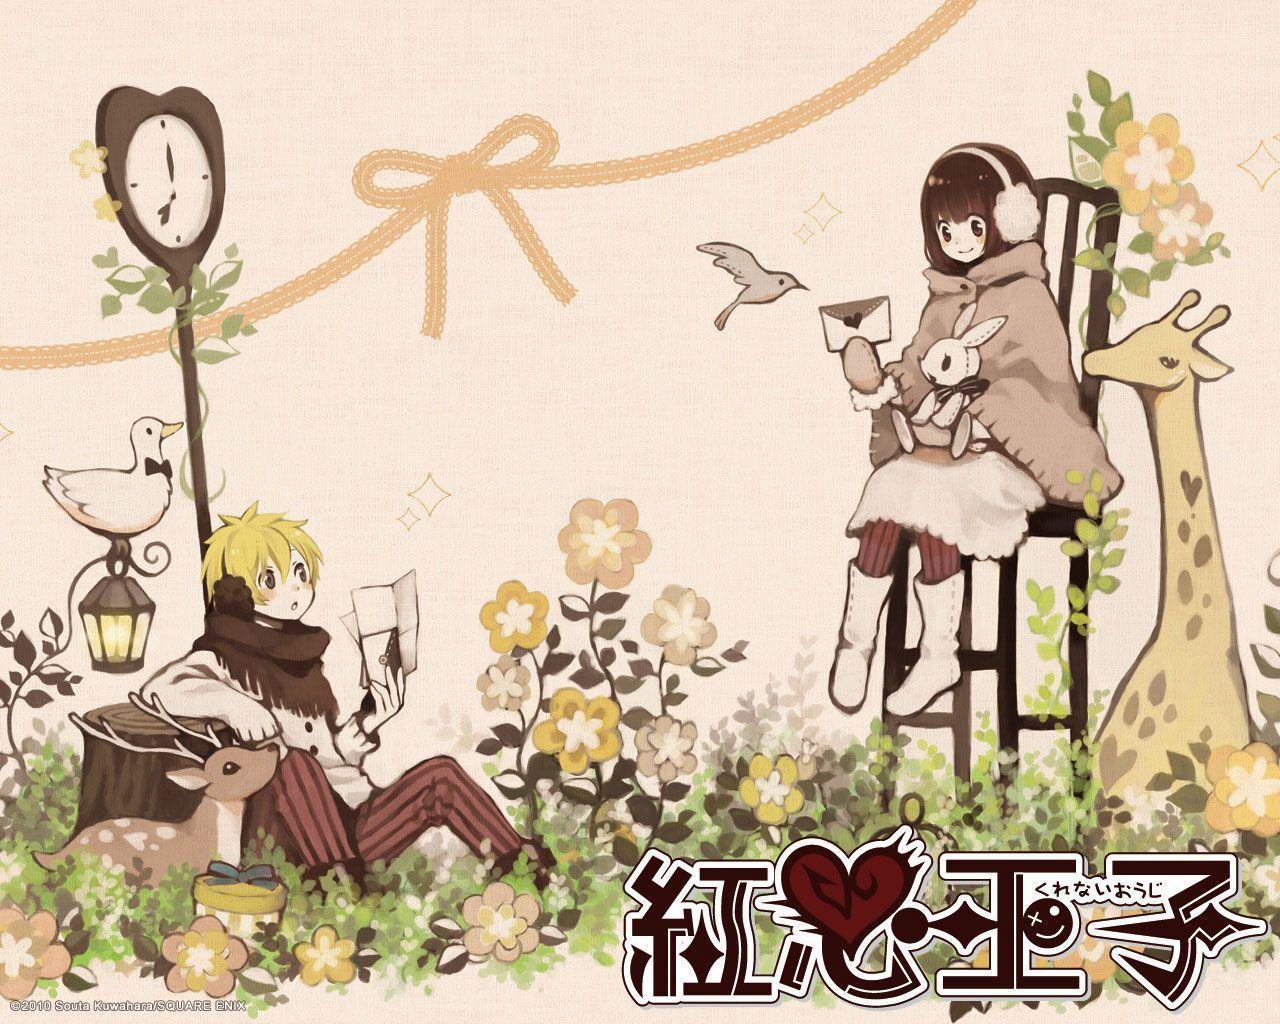 Hearts Prince cute anime wallpaper comics desktop background